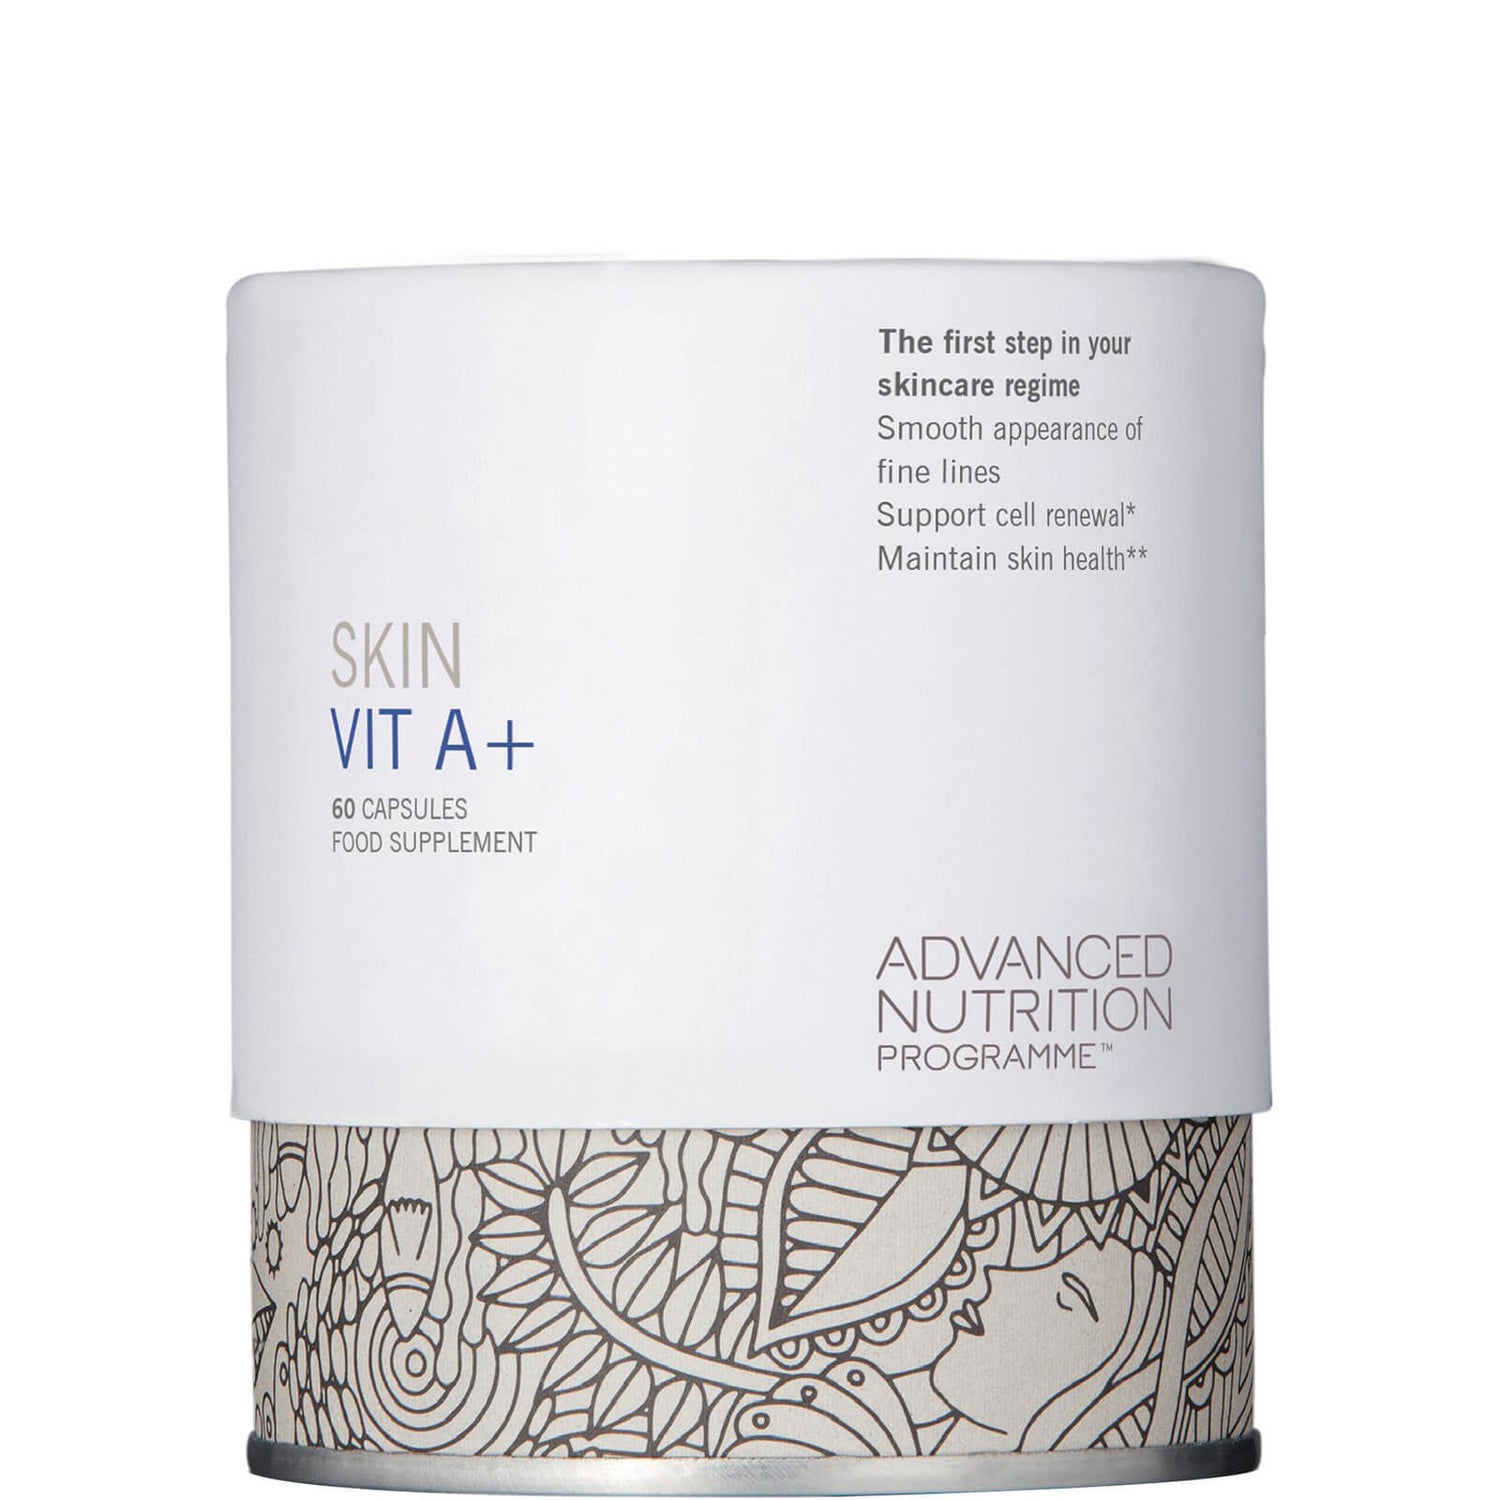 Advanced Nutrition Programme™ Skin Vit A+ Capsules